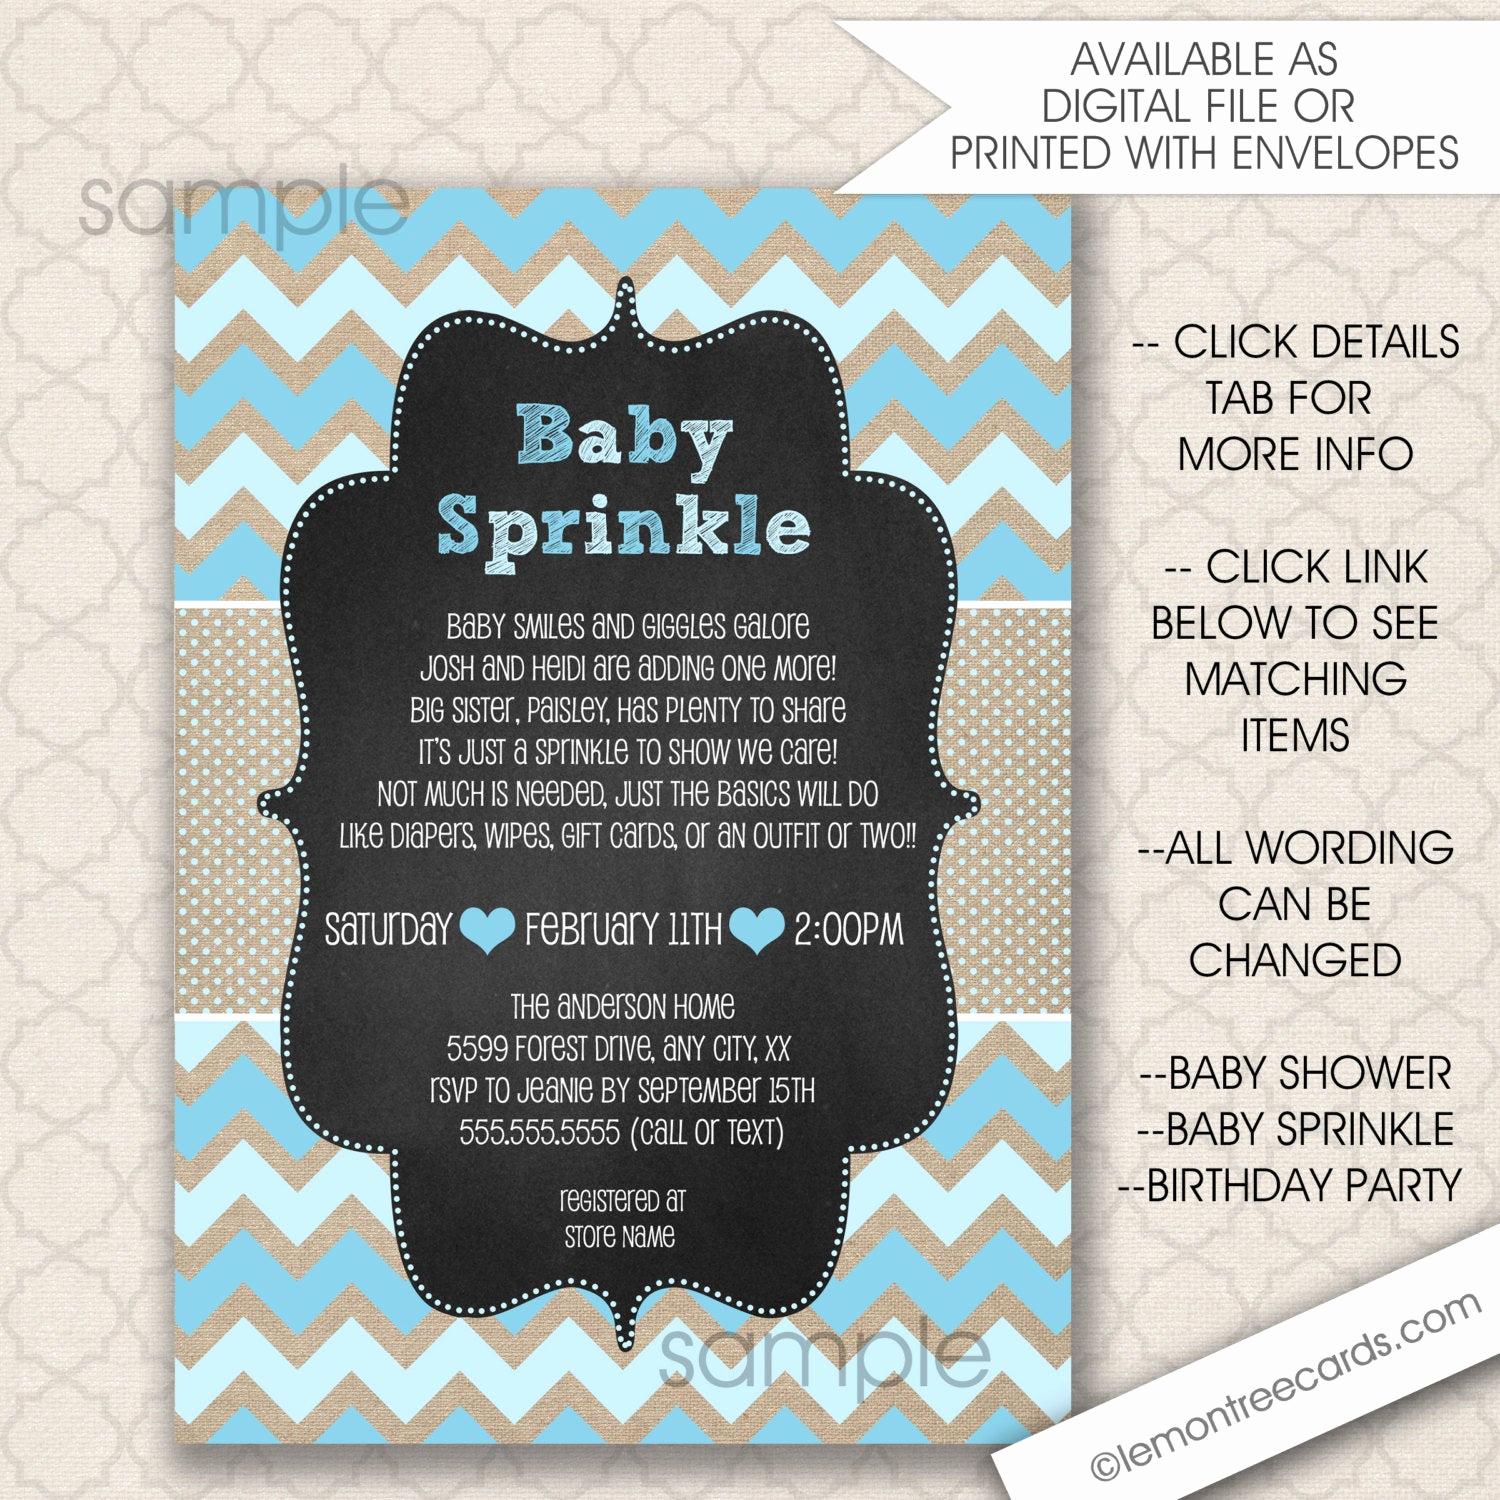 Sprinkle Baby Shower Invitation Wording Best Of Rustic Baby Sprinkle Invitations Free Shipping Boy Baby